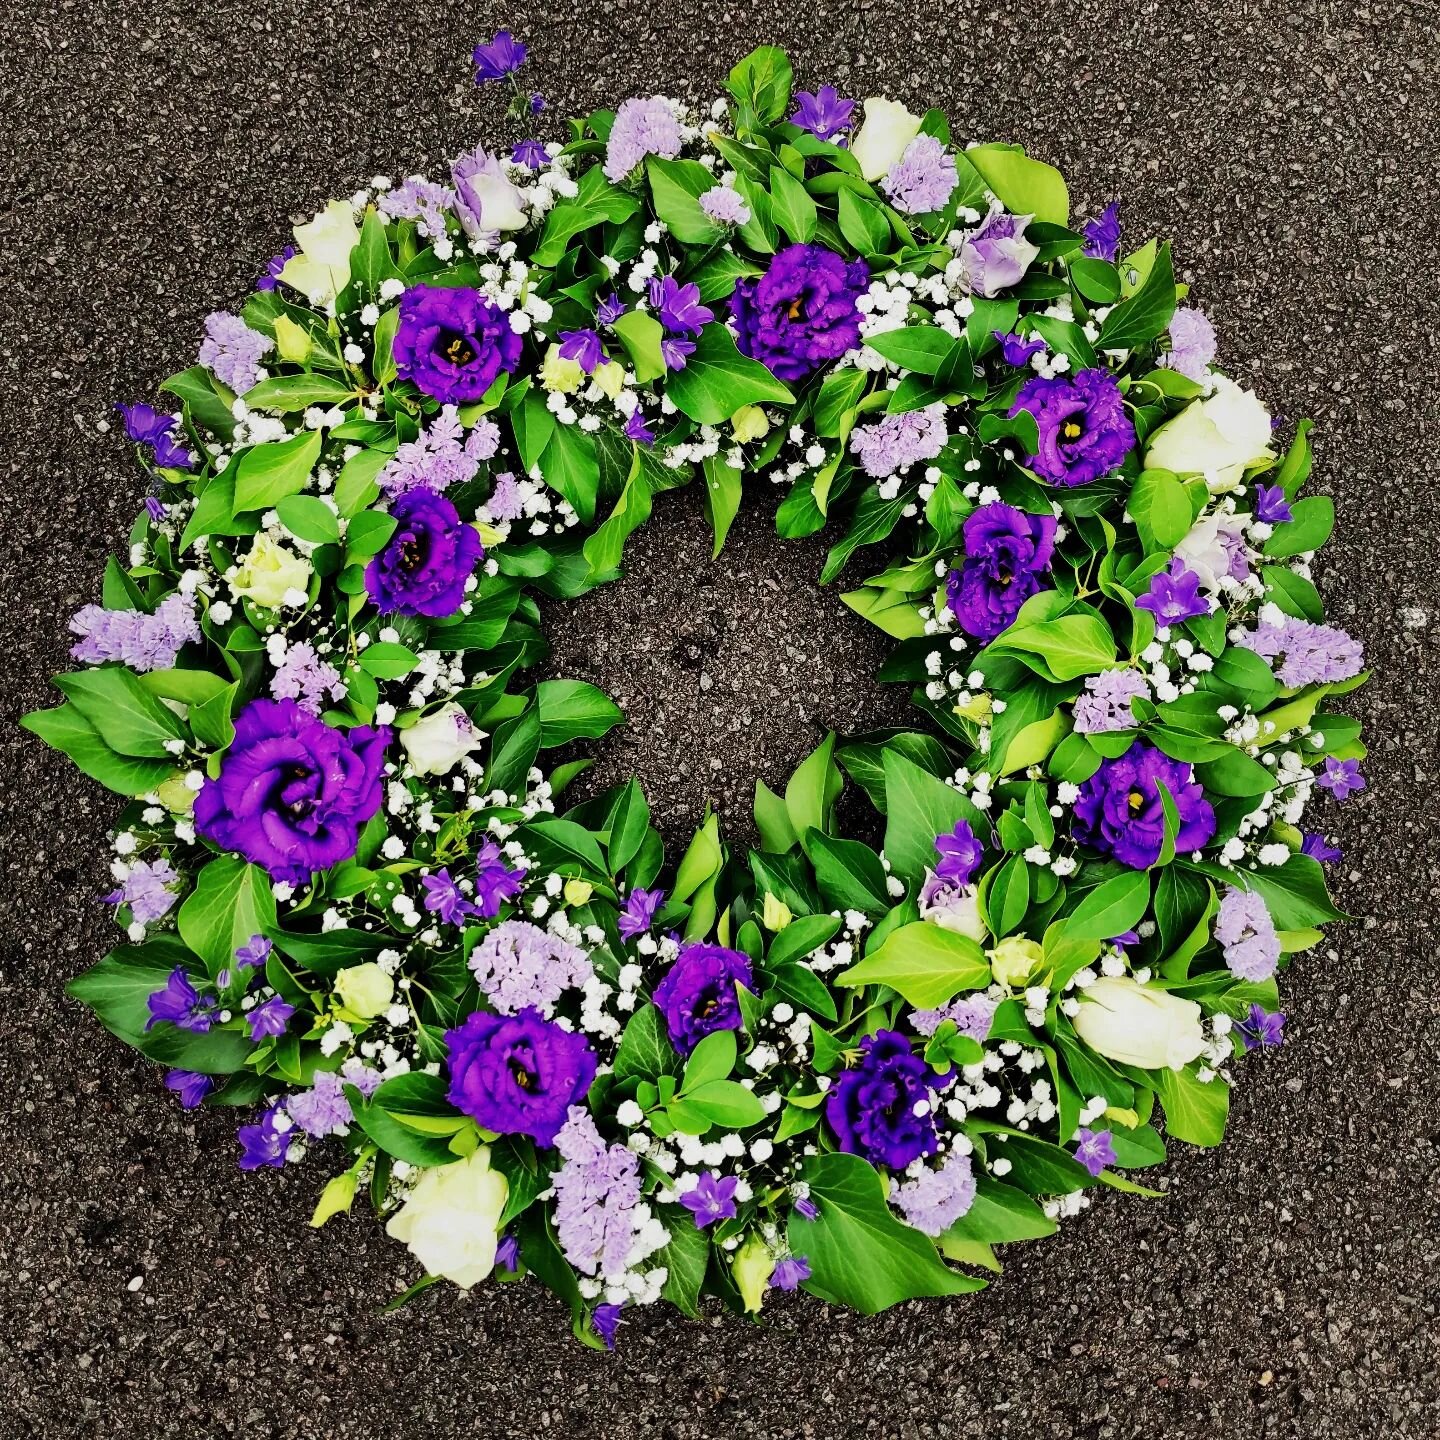 Purple and white seasonal wreath

#thefuneralflorist #shopstamford #peterboroughfuneralflowers #stamfordflorist #stamfordfuneral #oakhamflorist #peterborough